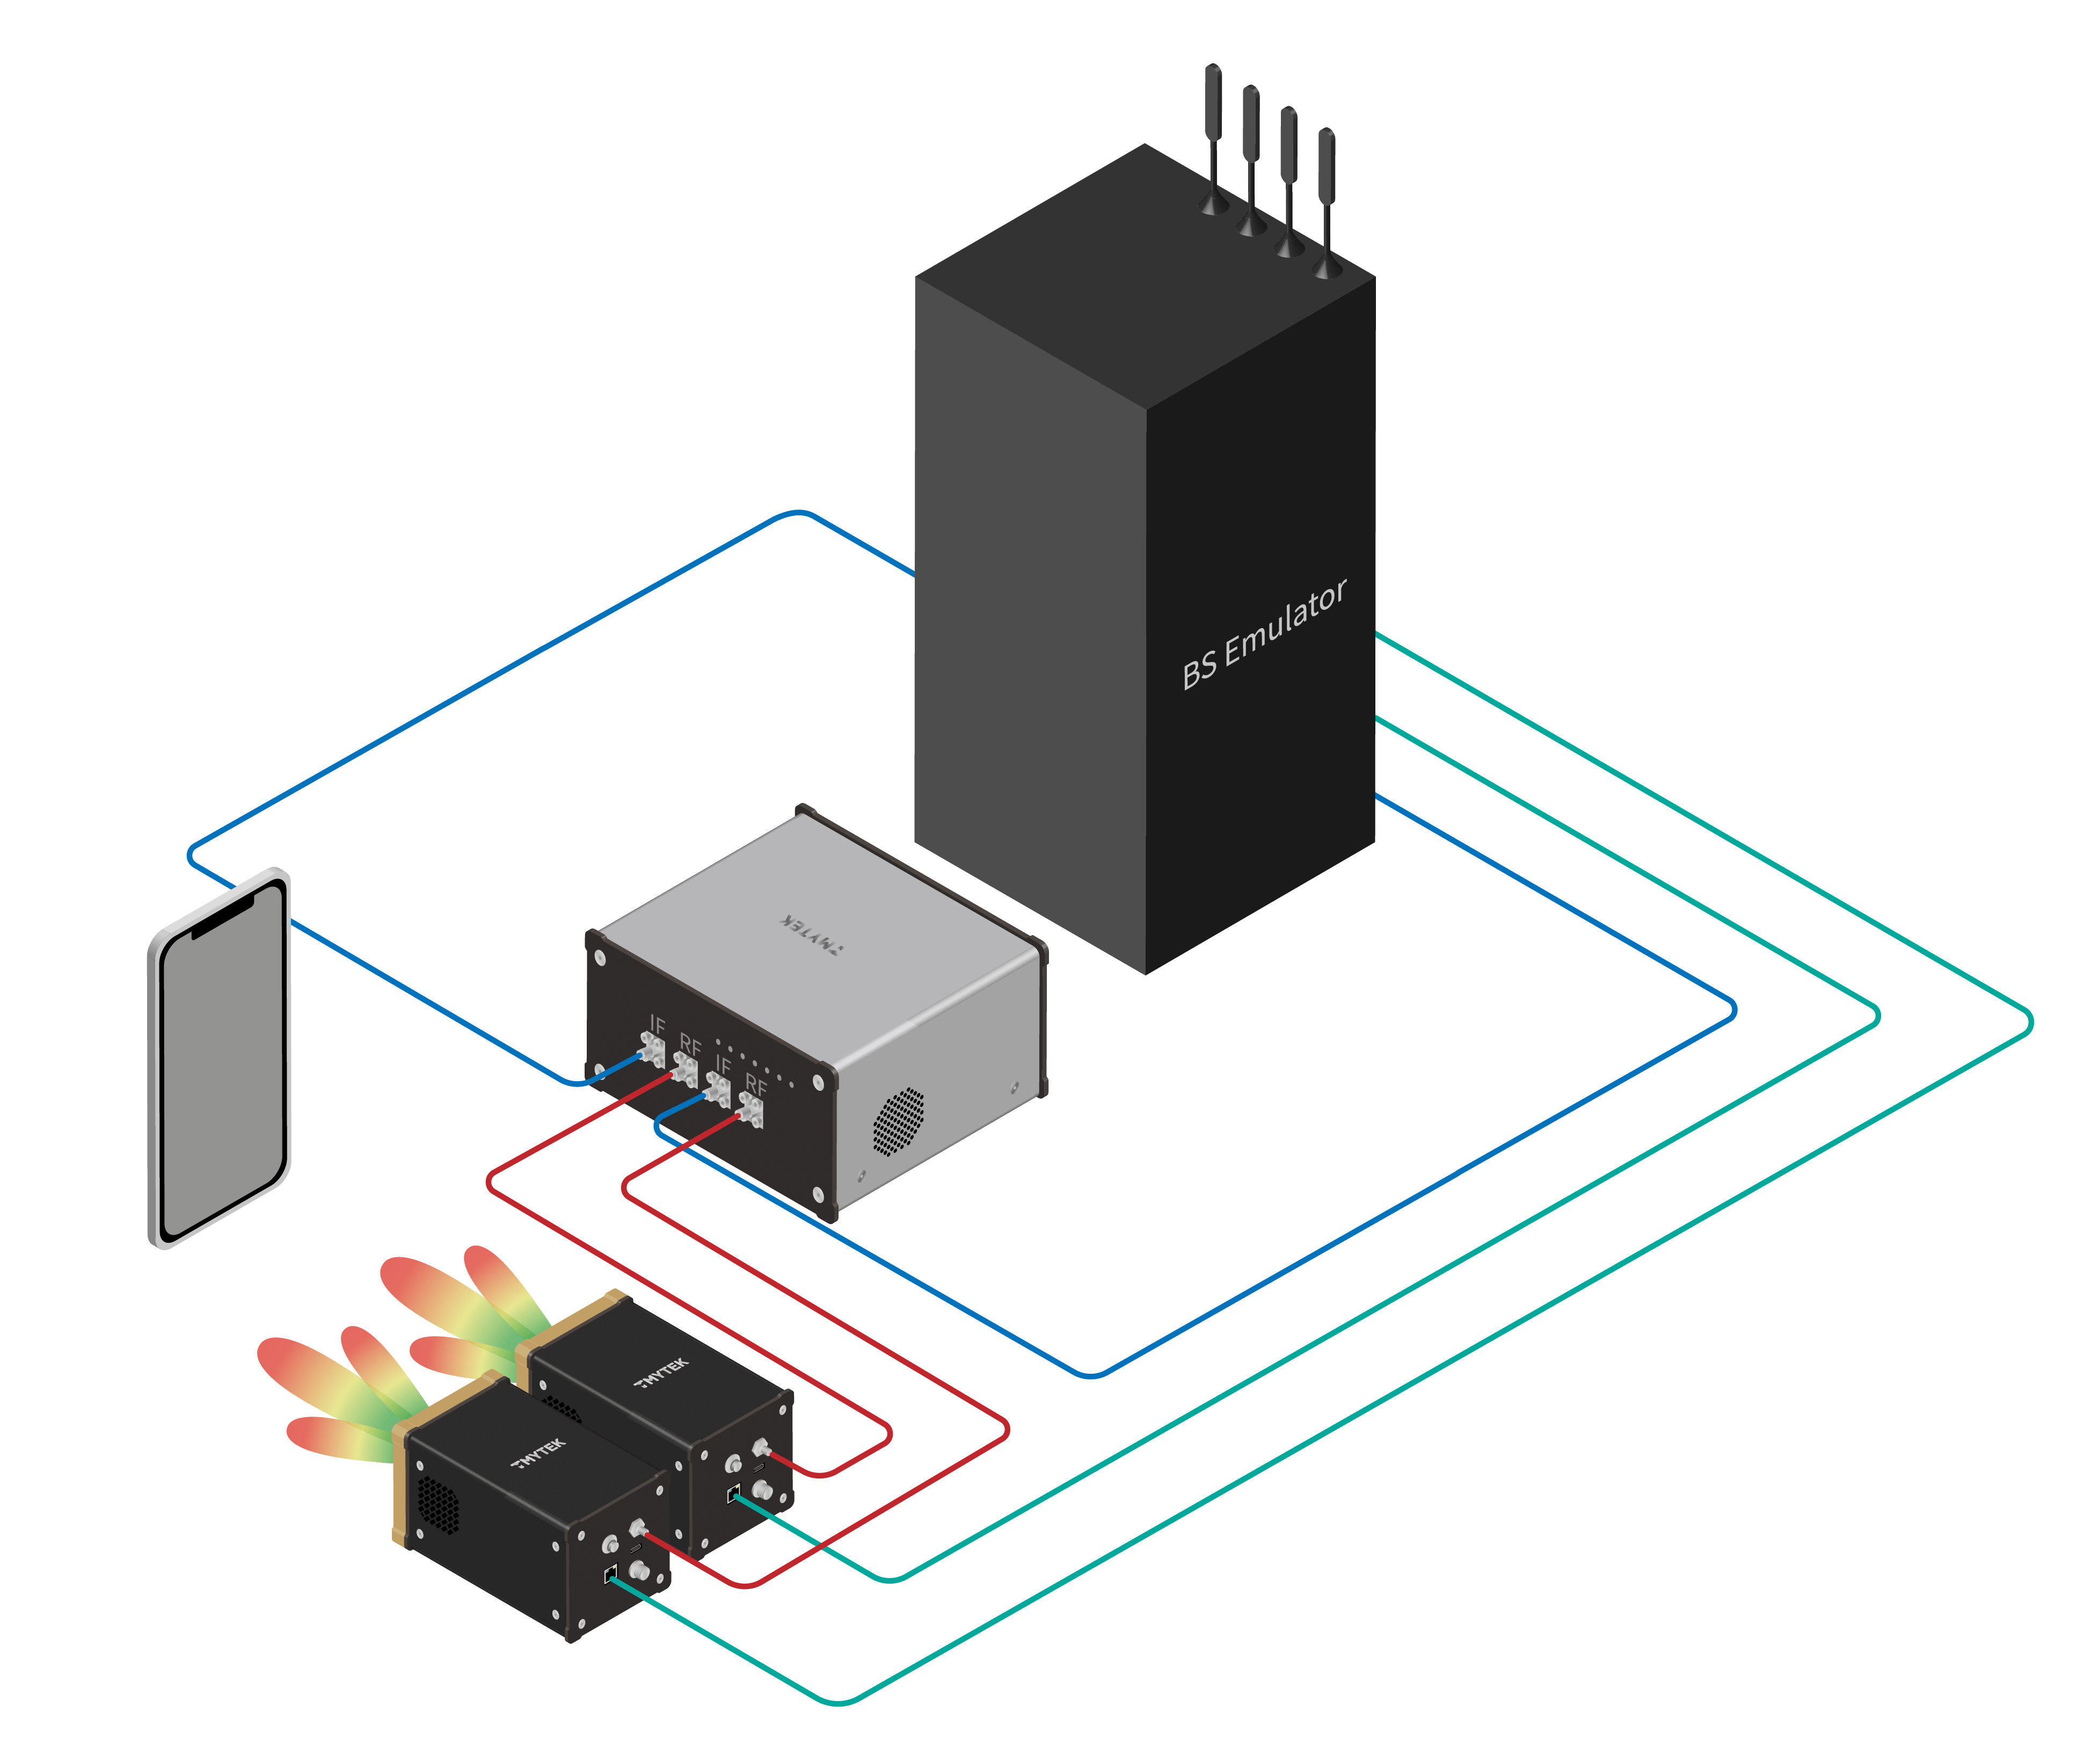 Fig. 4. Block diagram - Emulator Testing Architecture using BBox 5G